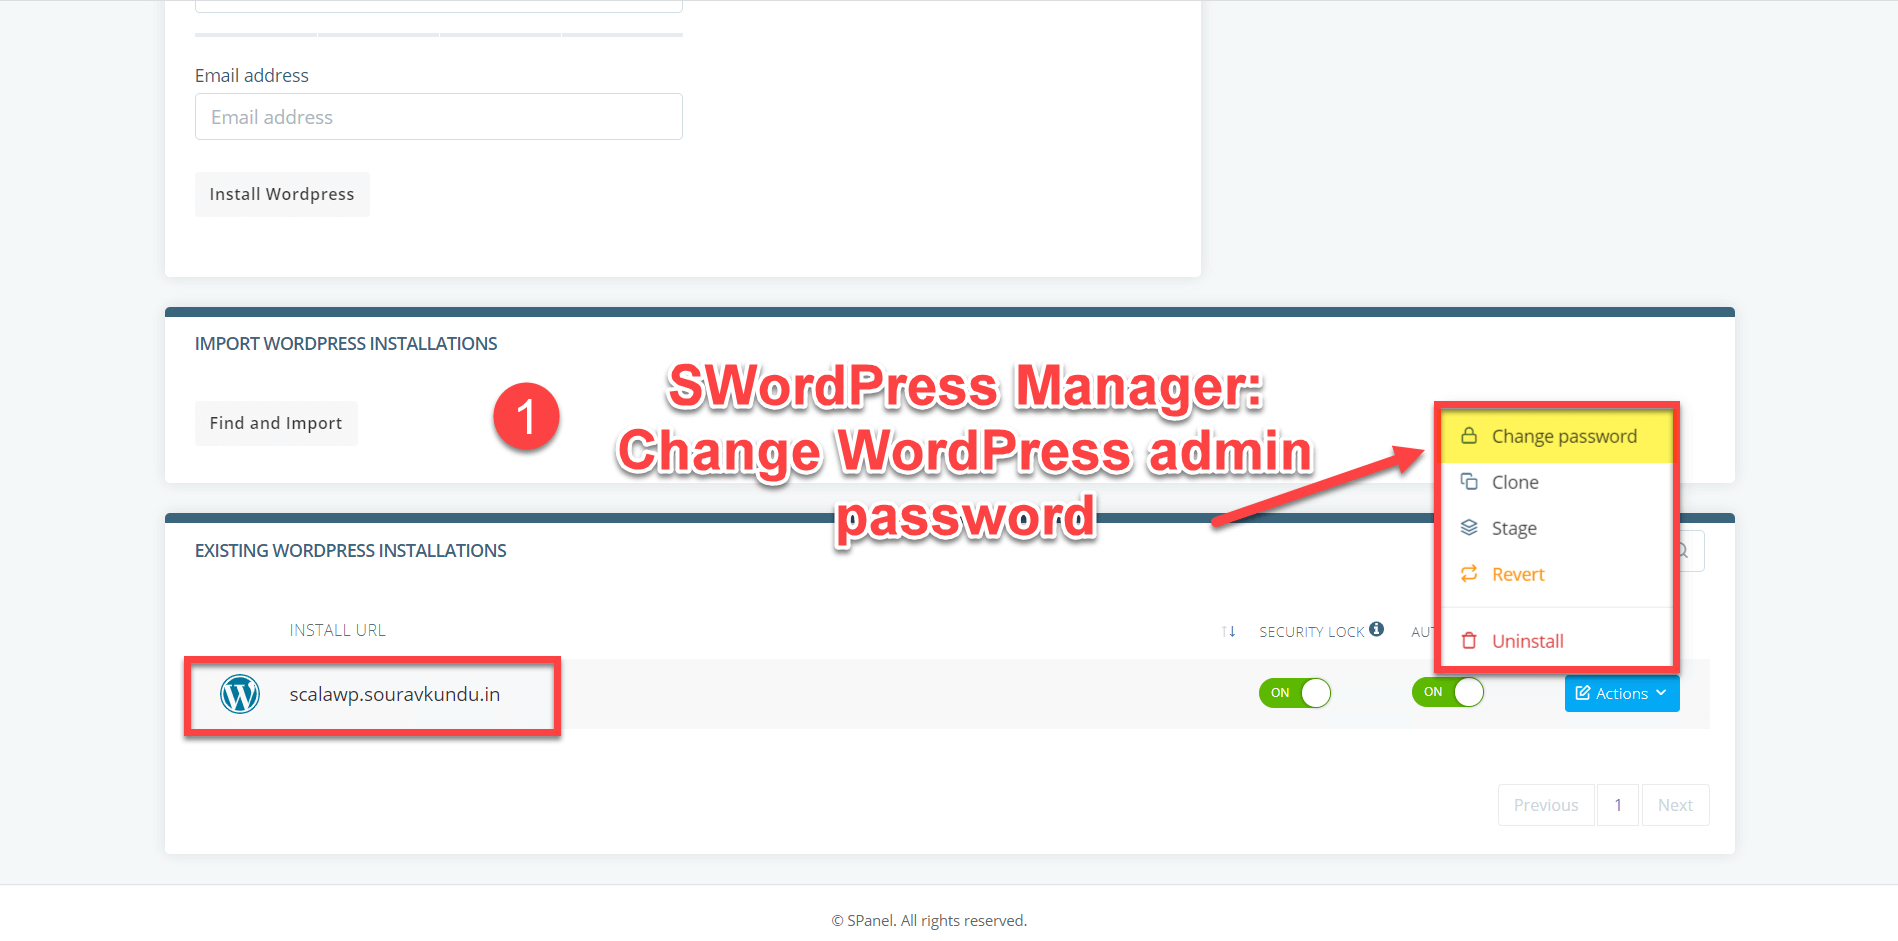 scala swordpress manager options - change wordpress admin password 1